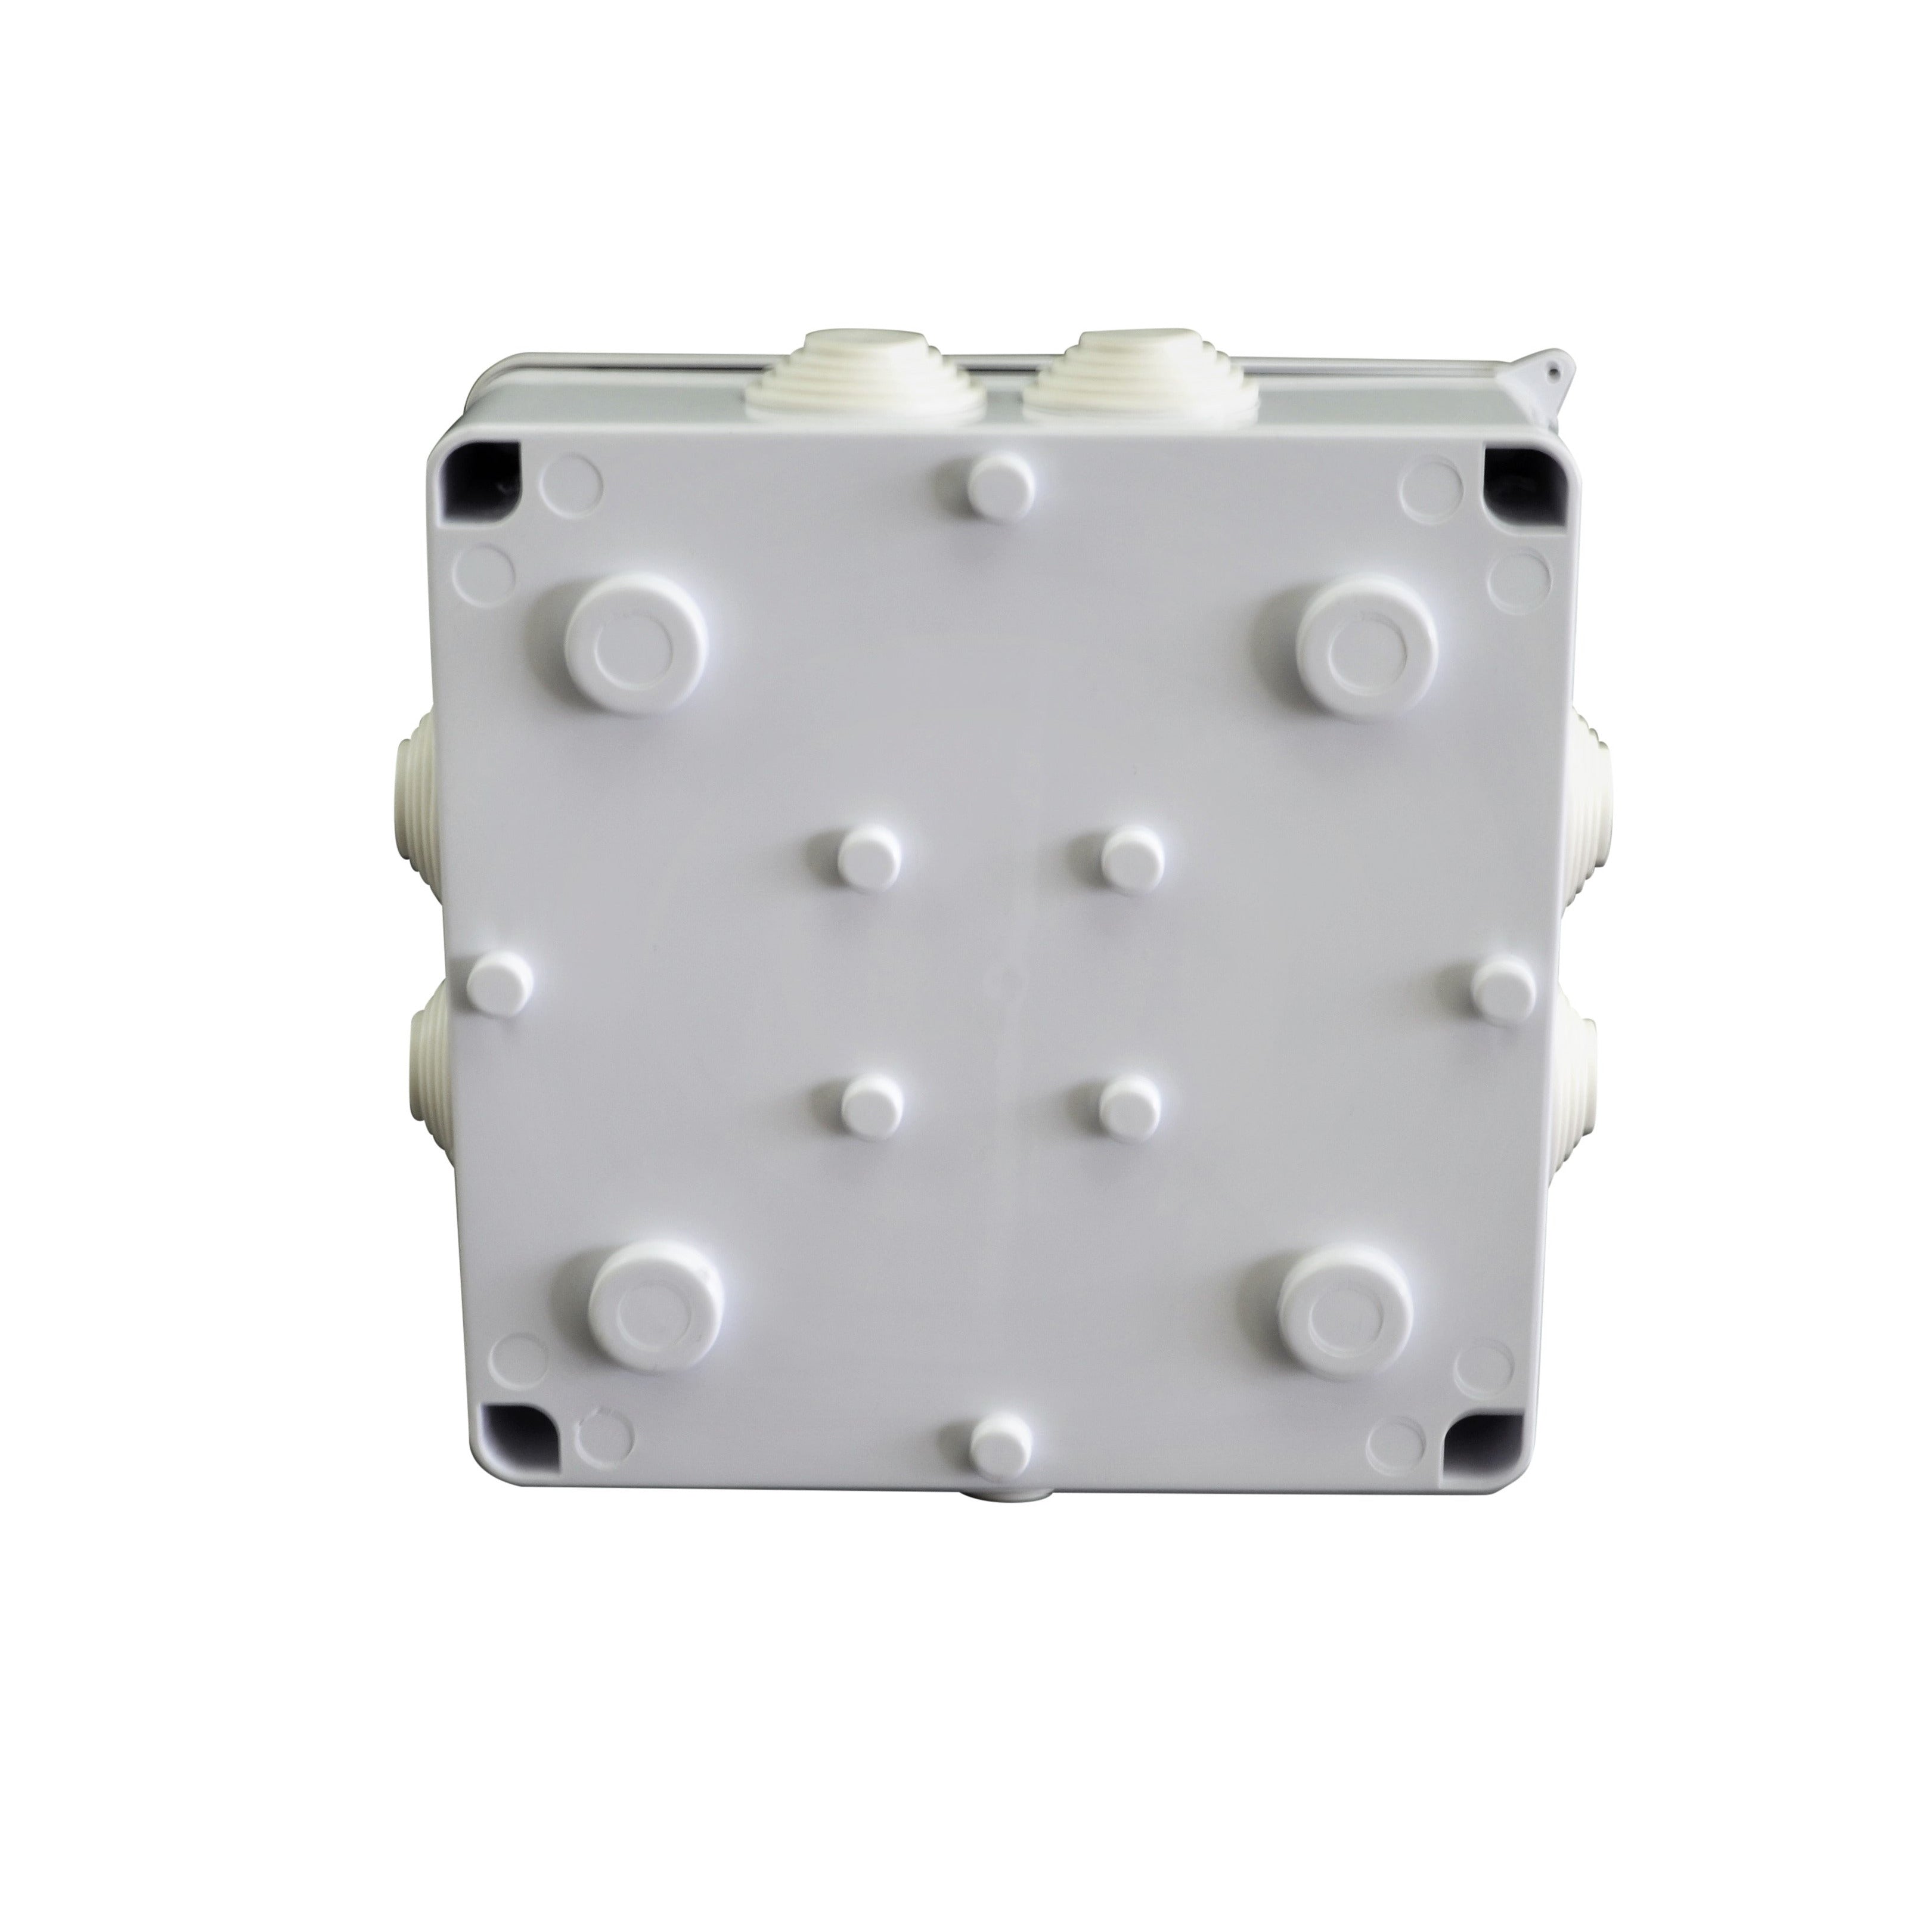 150x150x70 mm ABS Plastic IP65 Waterproof Junction Box